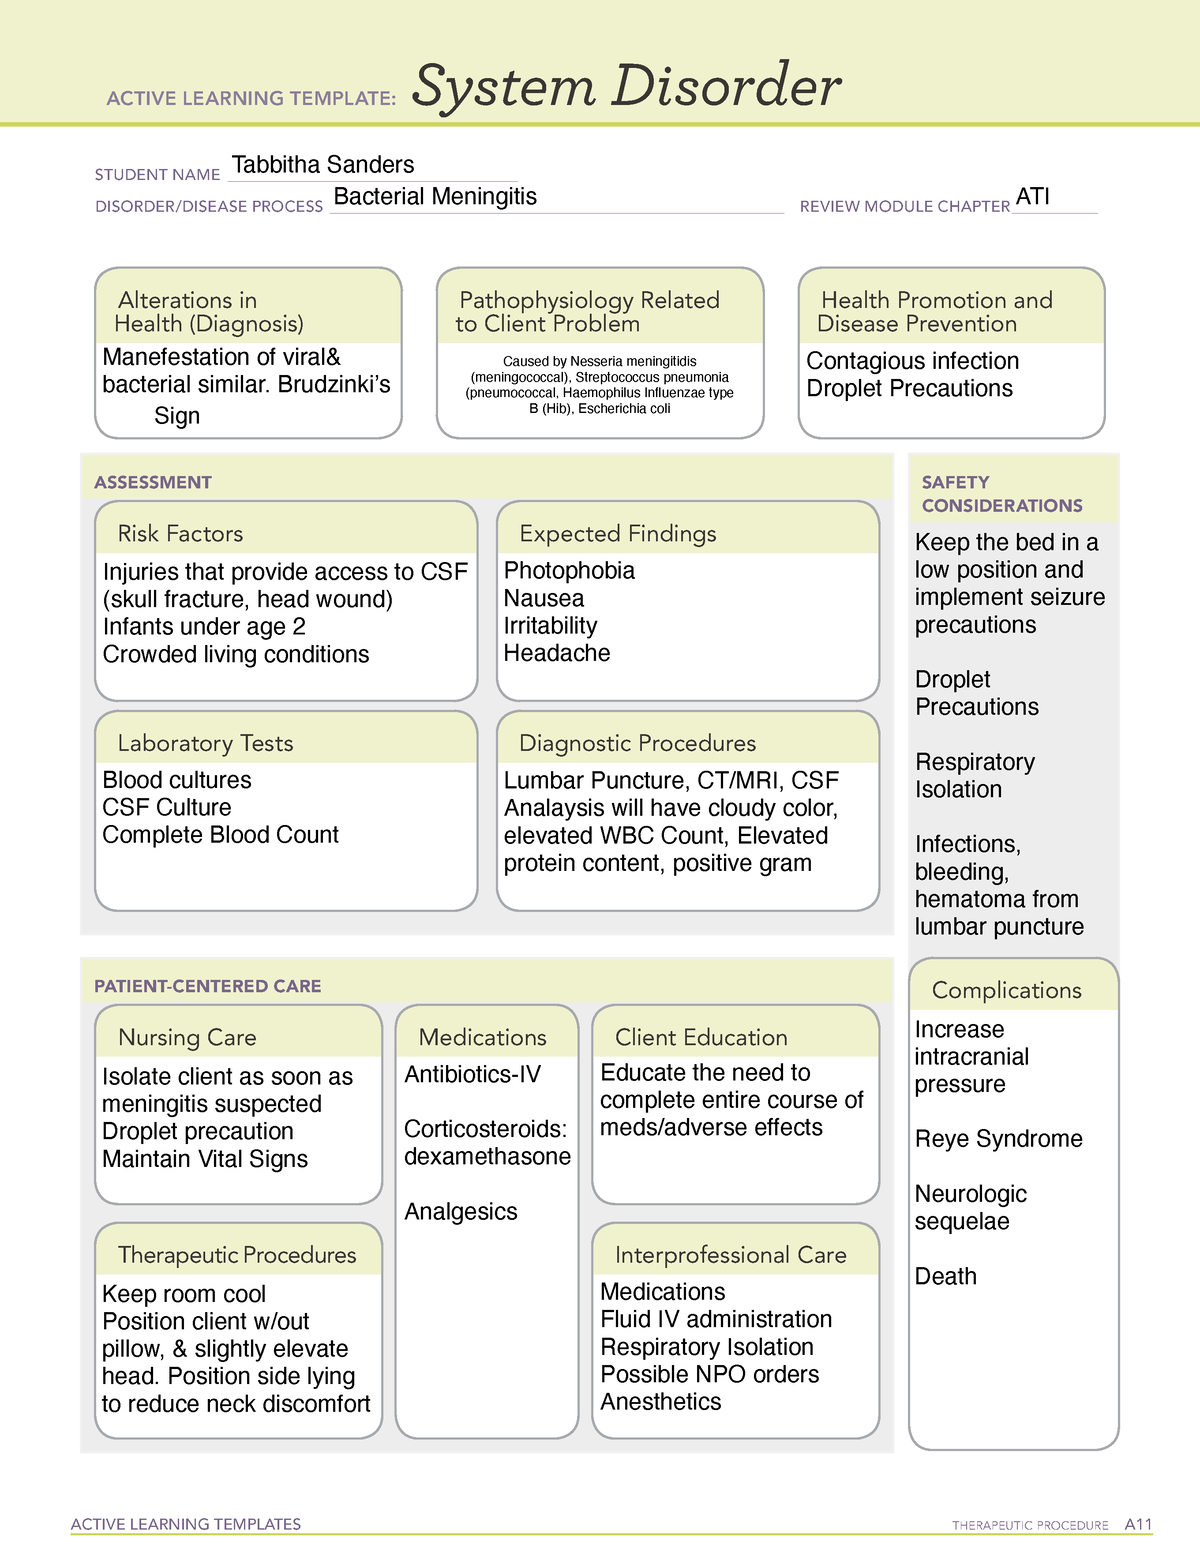 ati-focused-review-meningitis-active-learning-templates-therapeutic-procedure-a-system